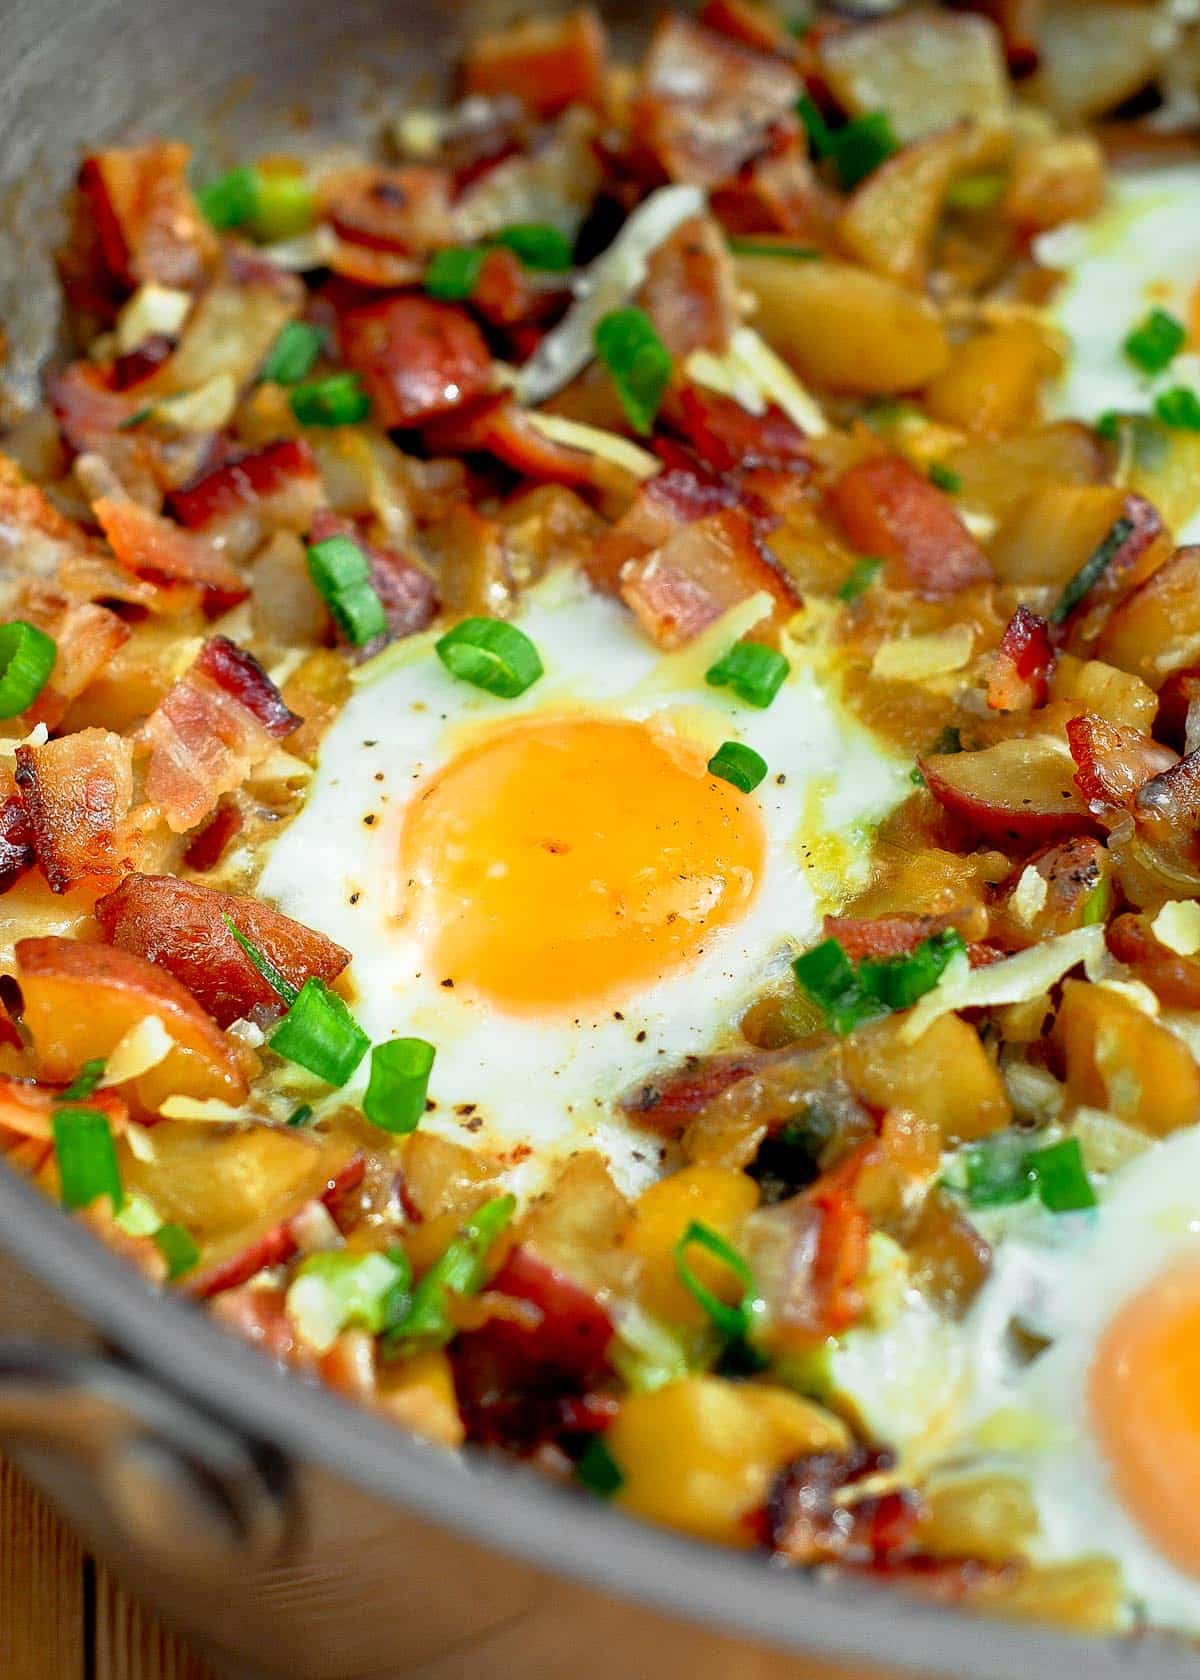 Breakfast Skillet With Bacon, Eggs & Crispy Potatoes